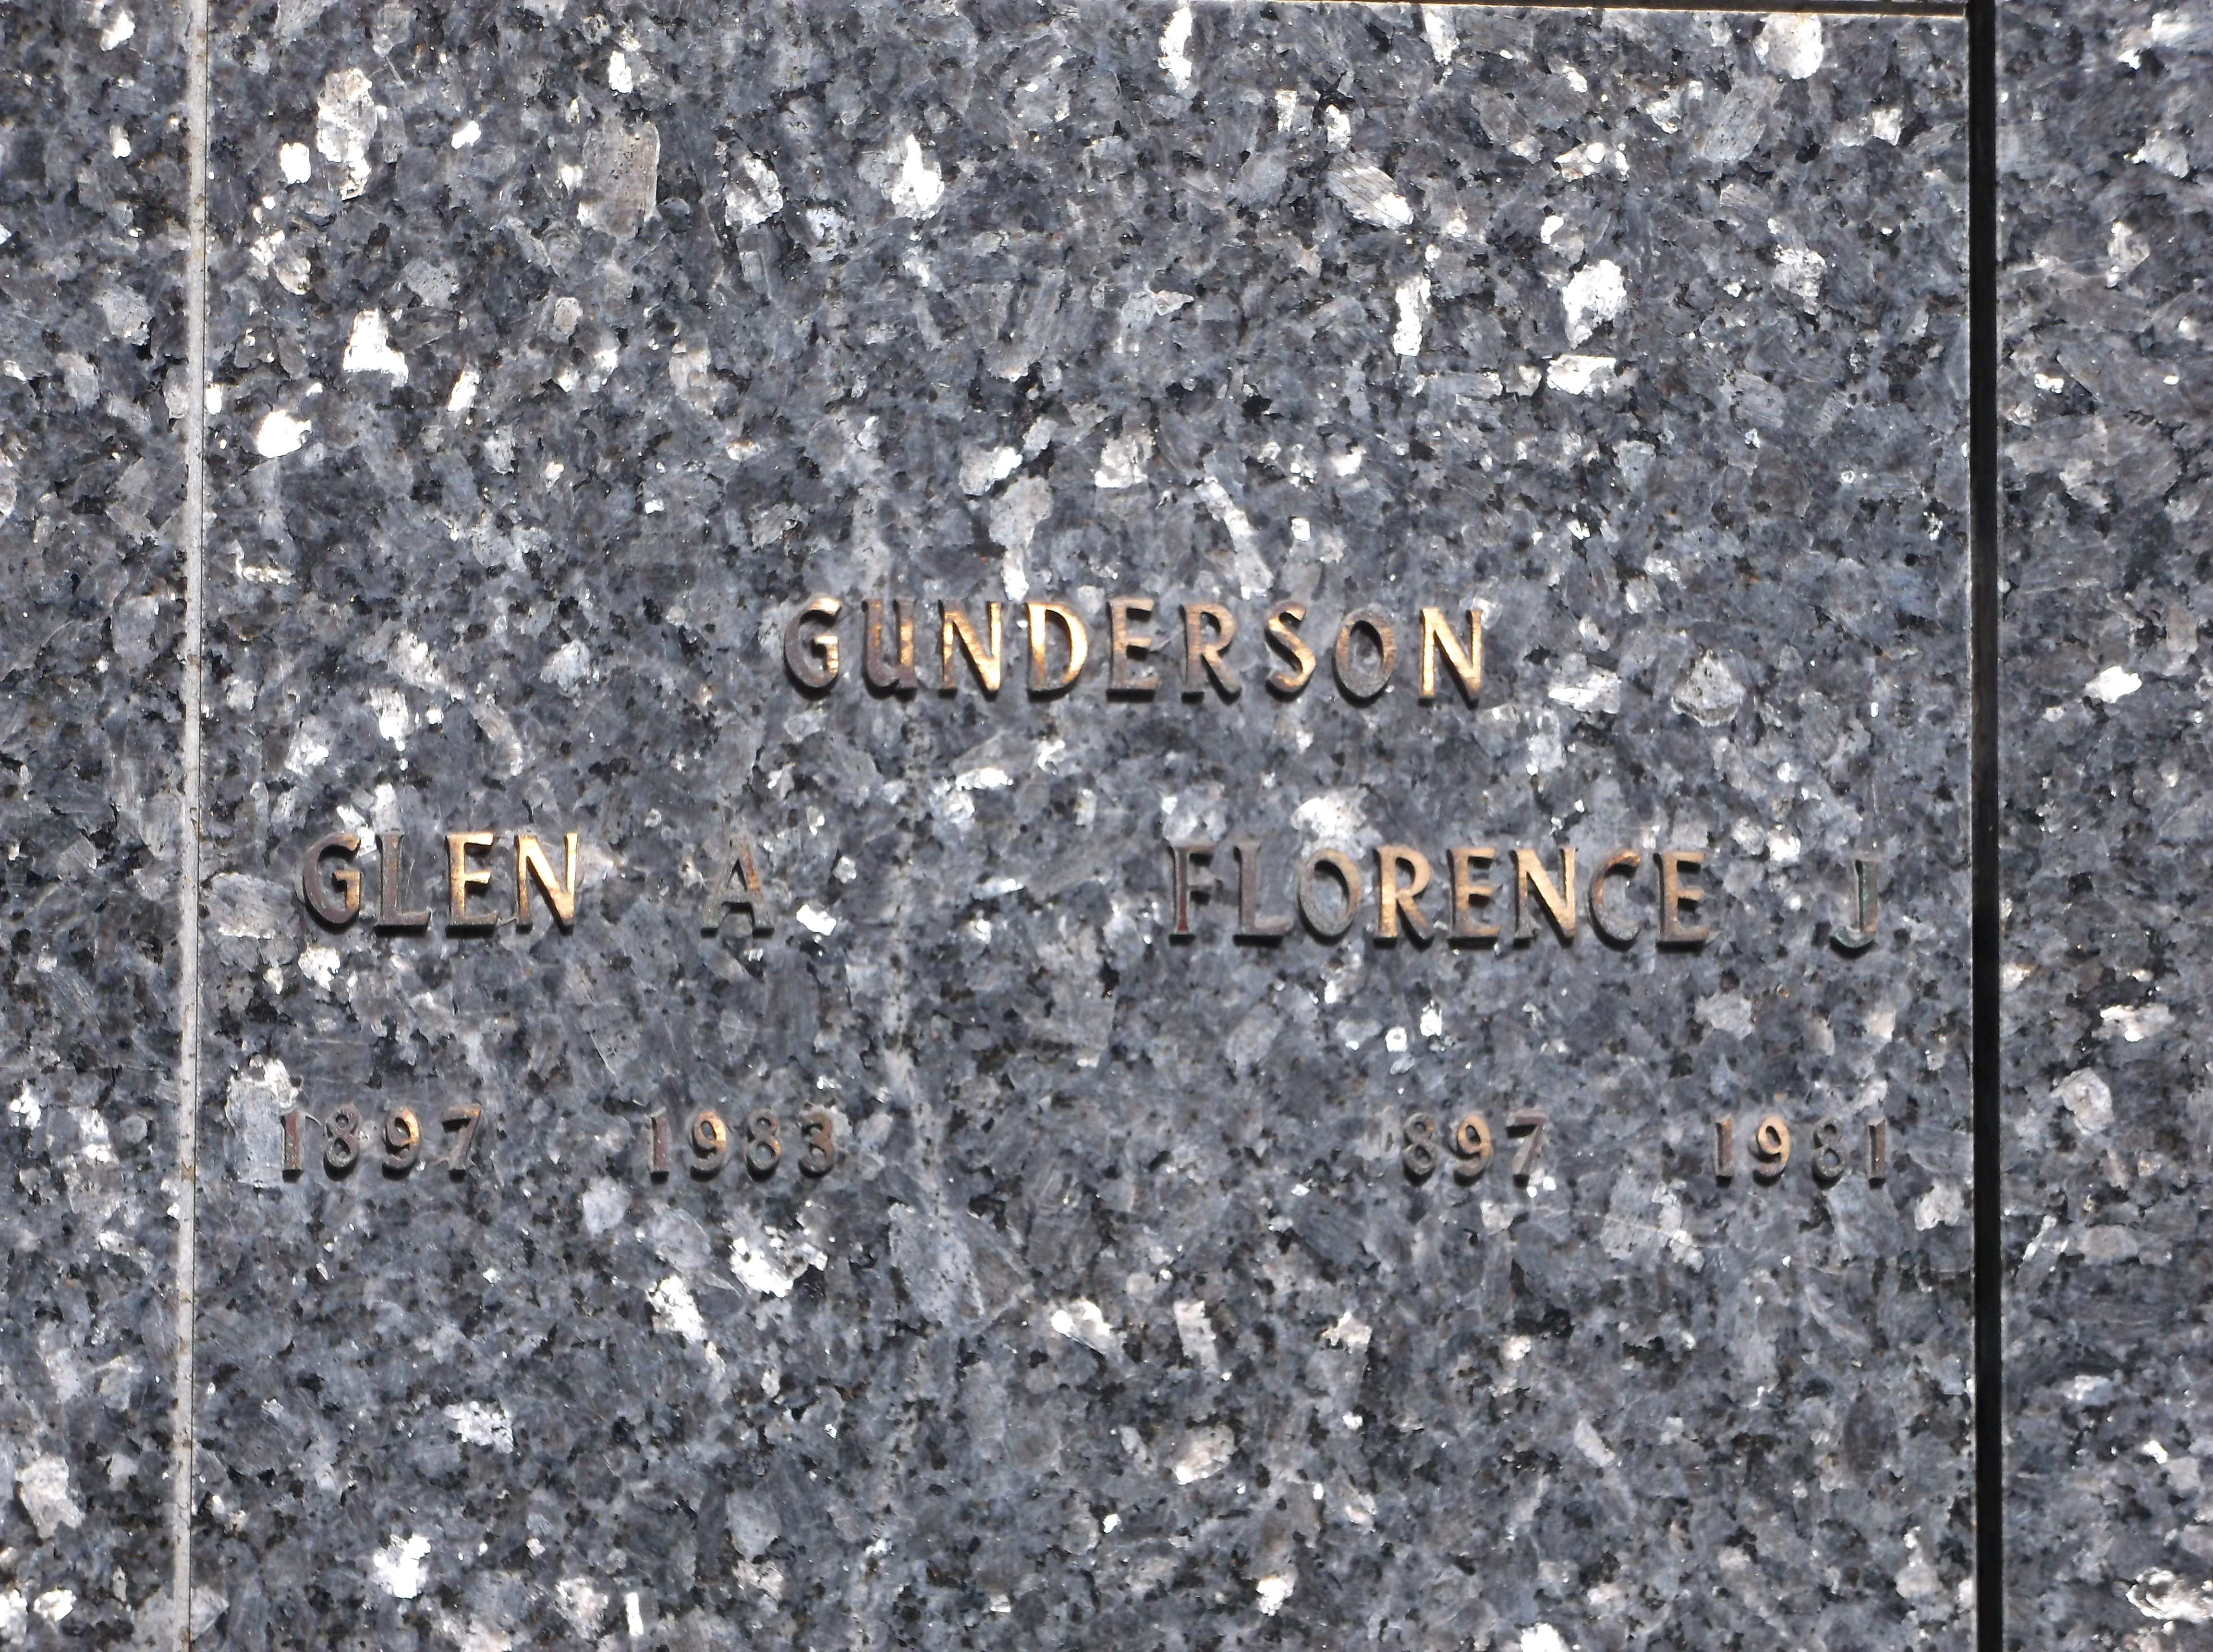 Glen A Gunderson